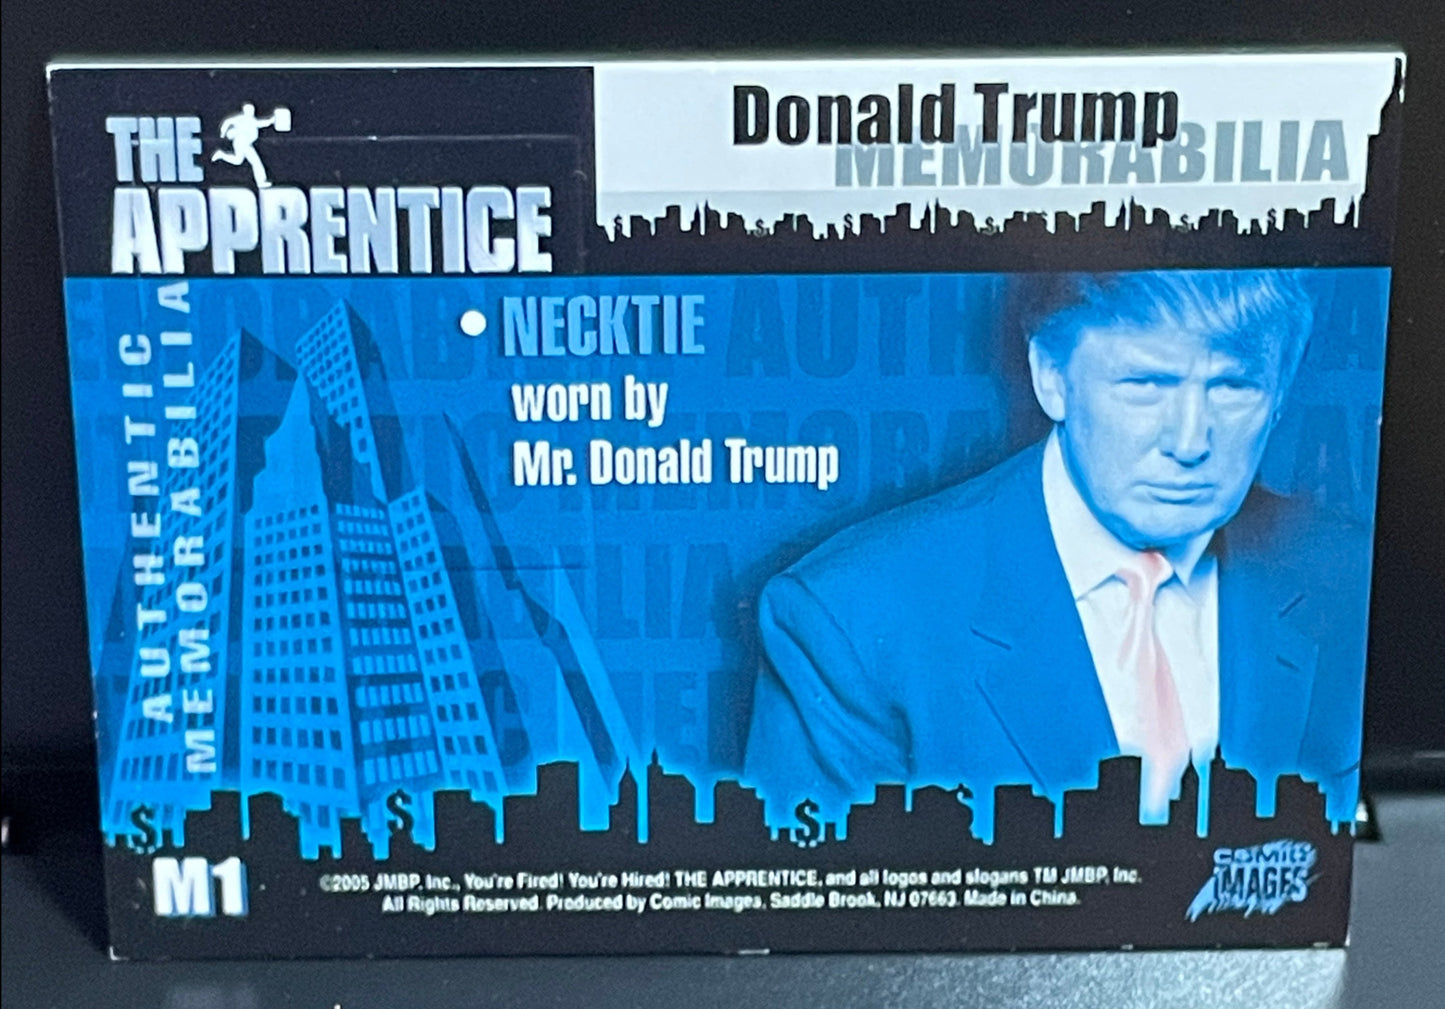 2005 The Apprentice Donald Trump "Taking Stock" Necktie Worn by Mr. Trump Card M1